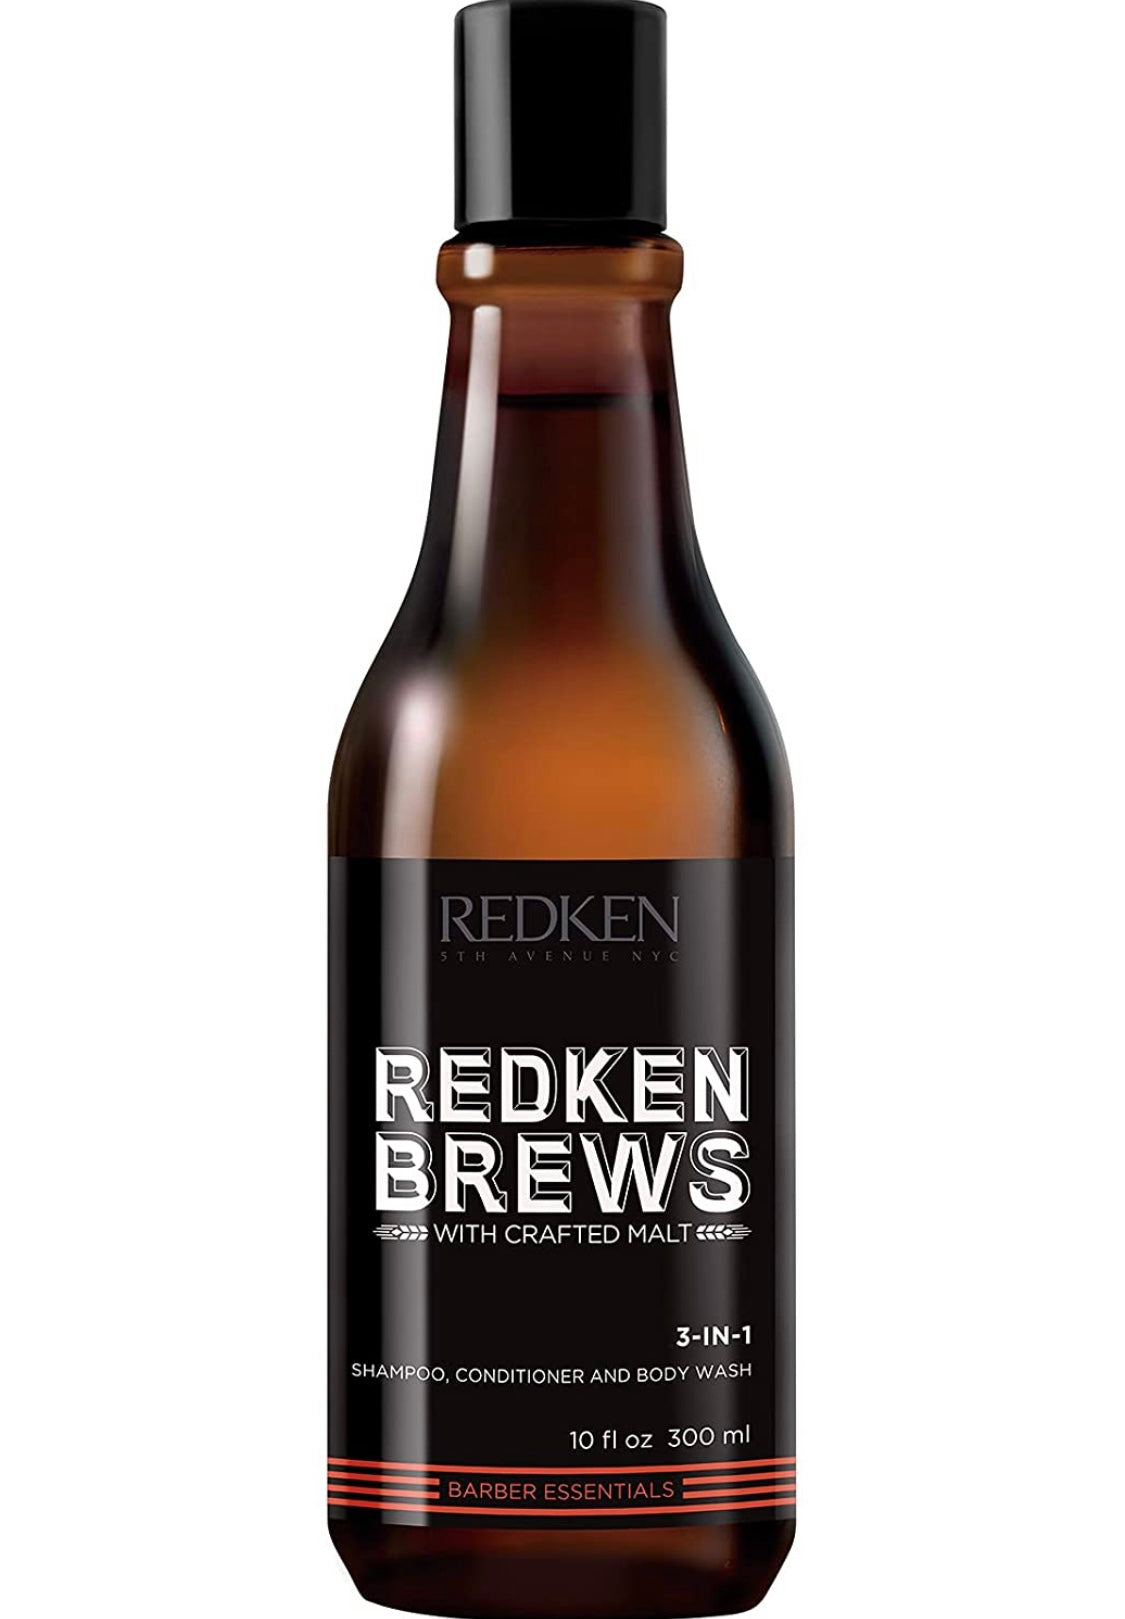 Redken - Brews 3 in 1 shampoo, conditioner and body wash 10 fl. oz./ 300ml